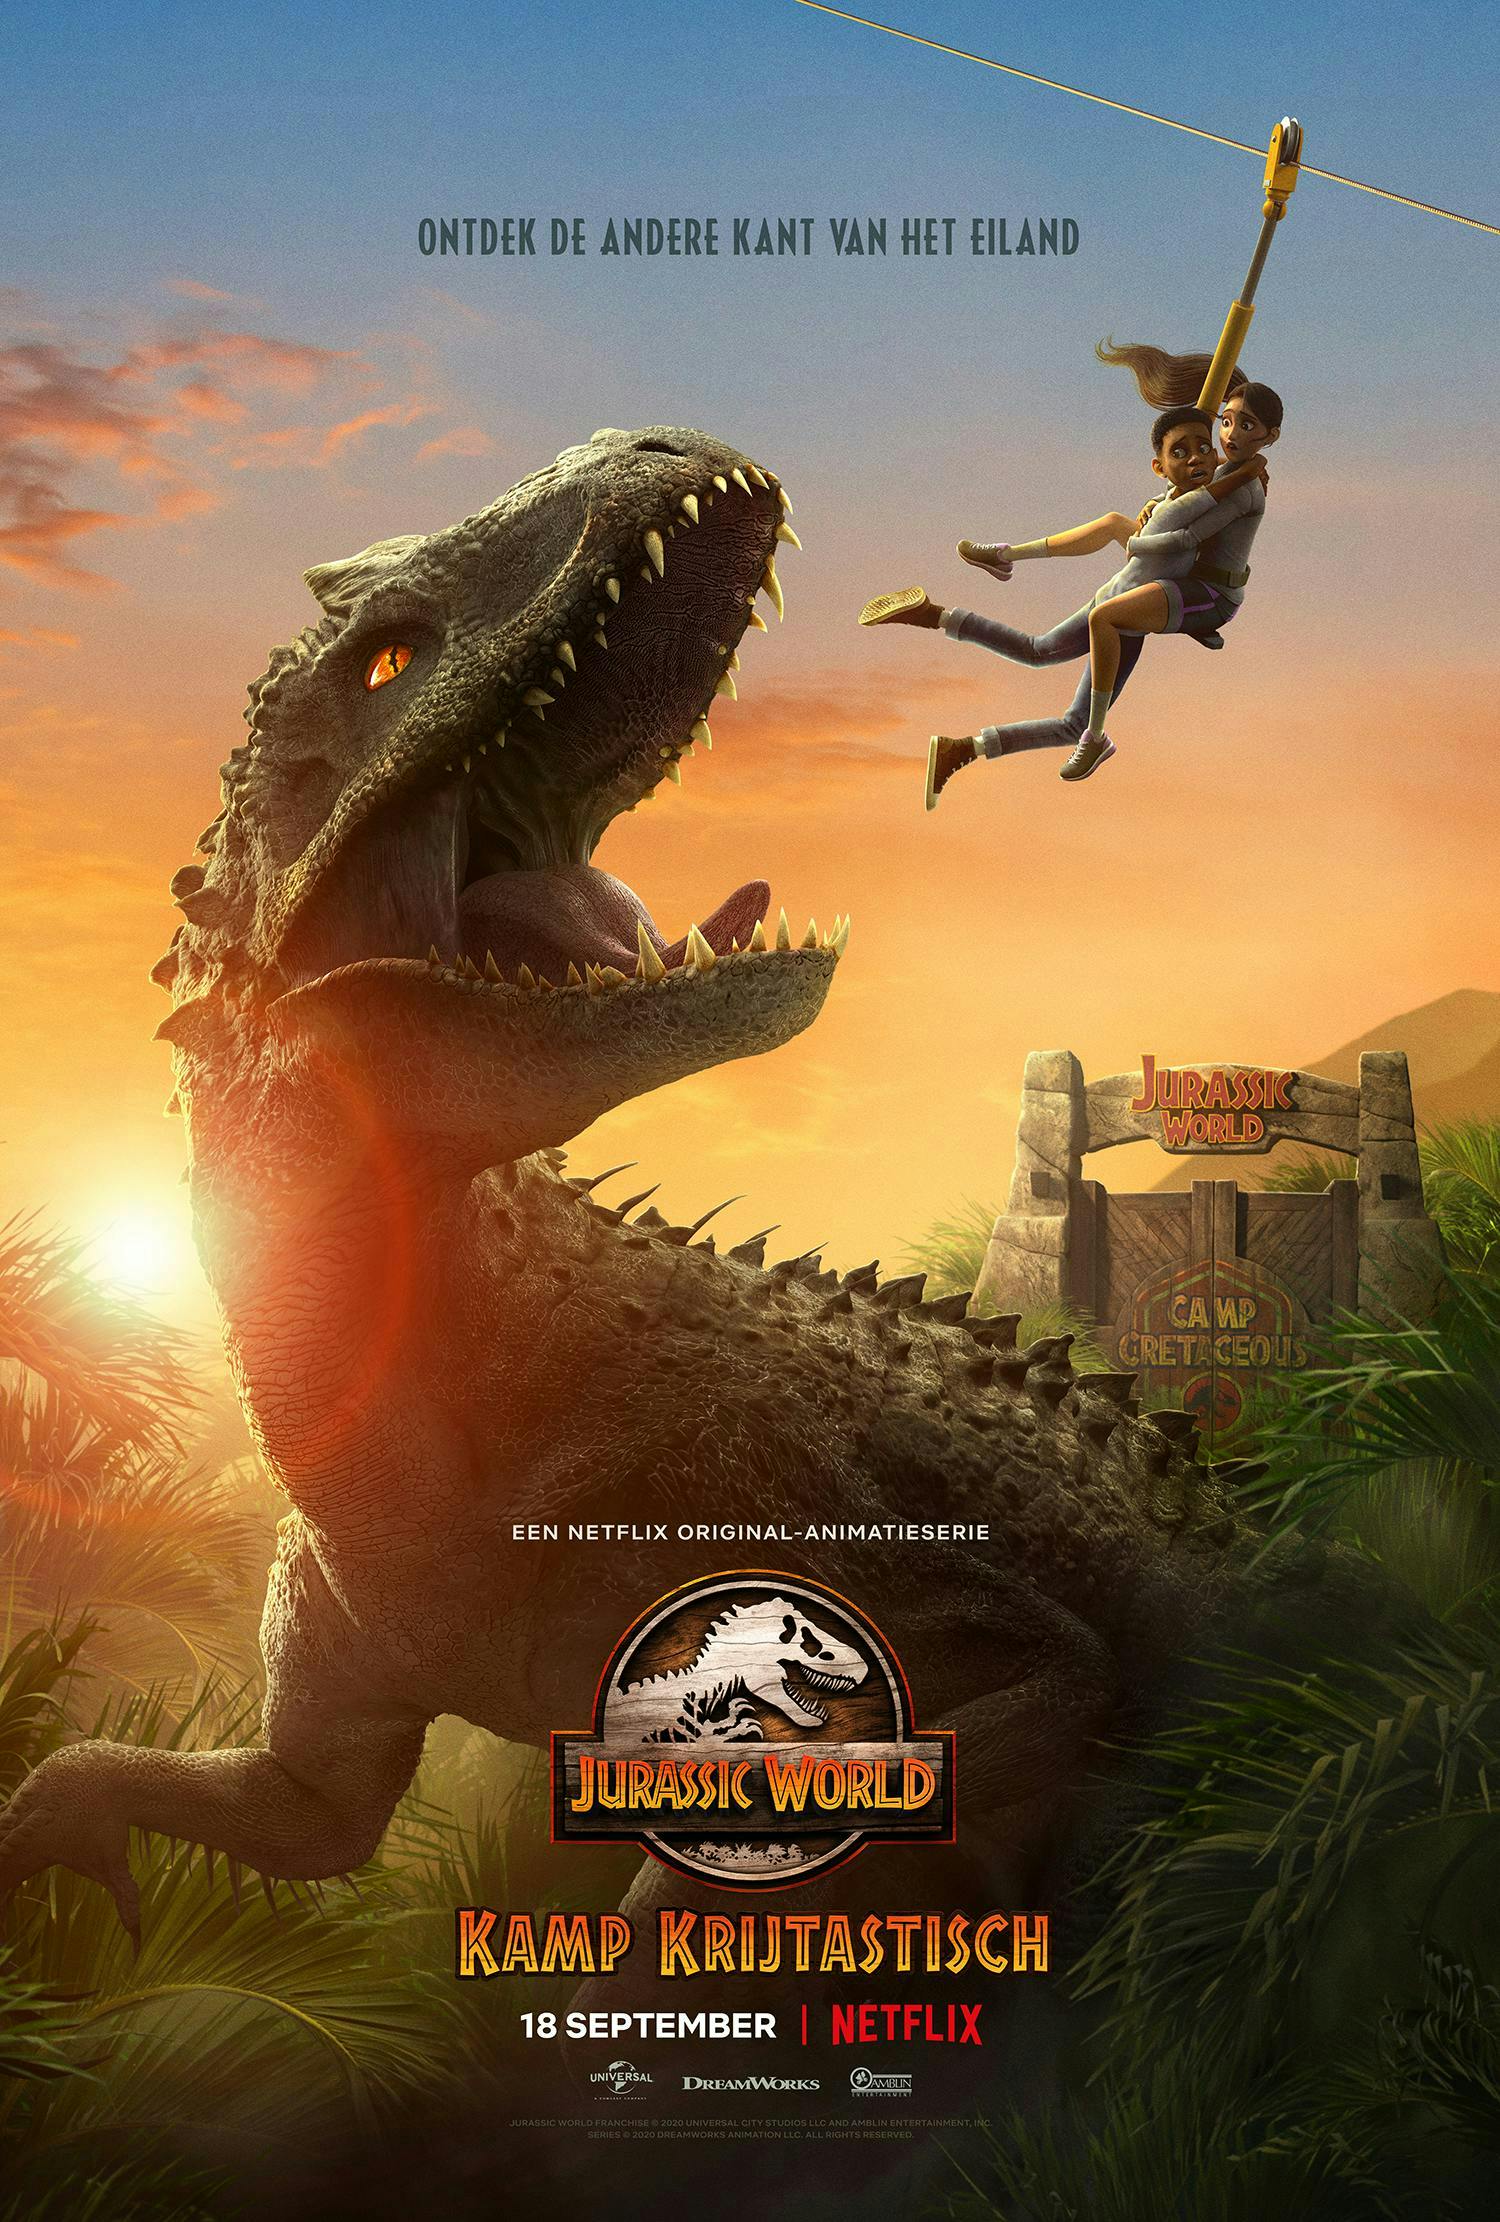 person human dinosaur reptile animal poster advertisement